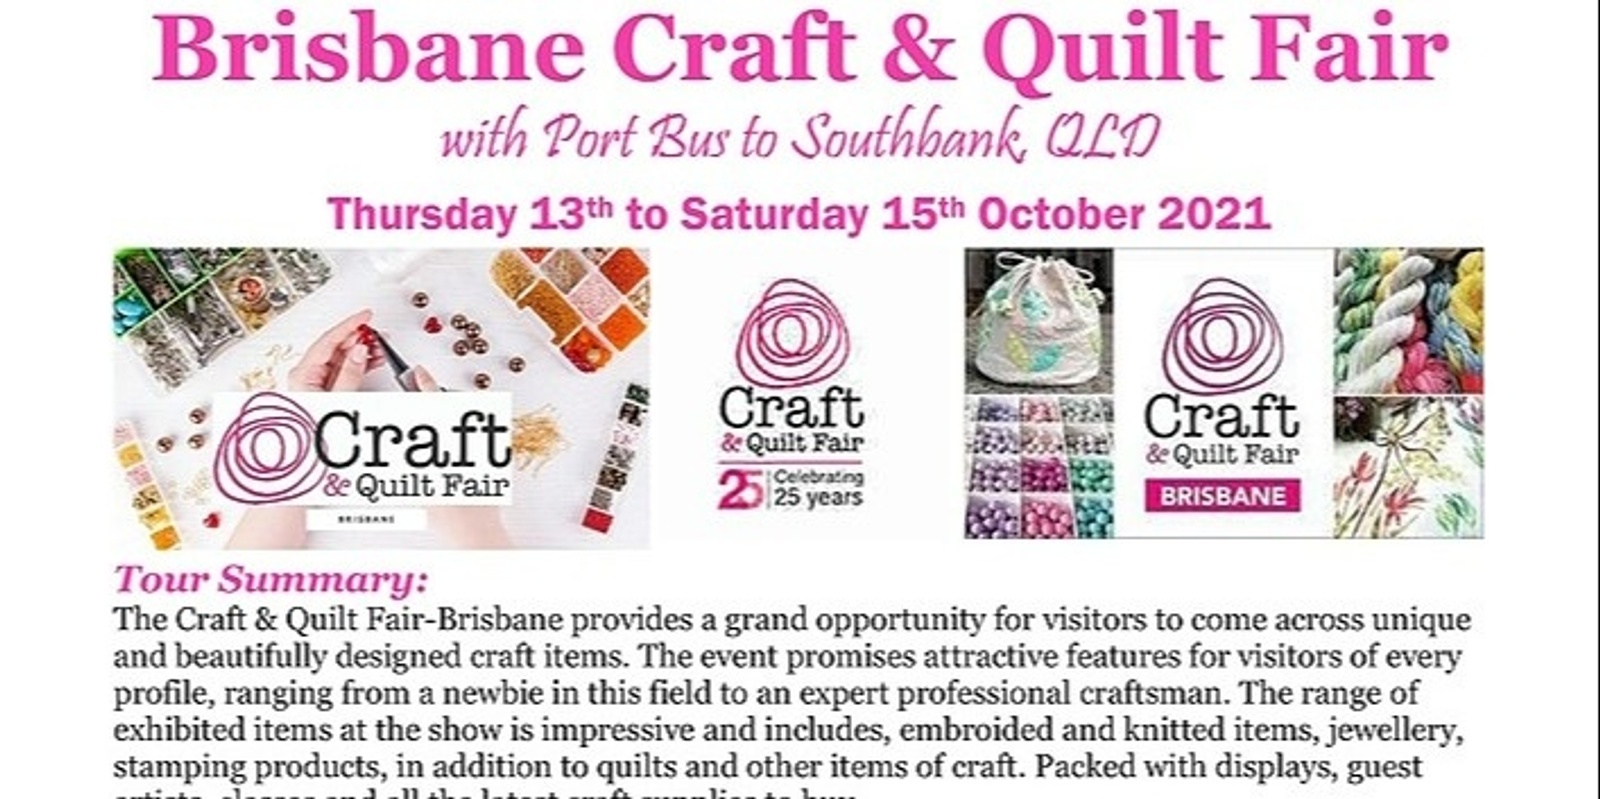 Banner image for Brisbane Craft & Quilt Fair